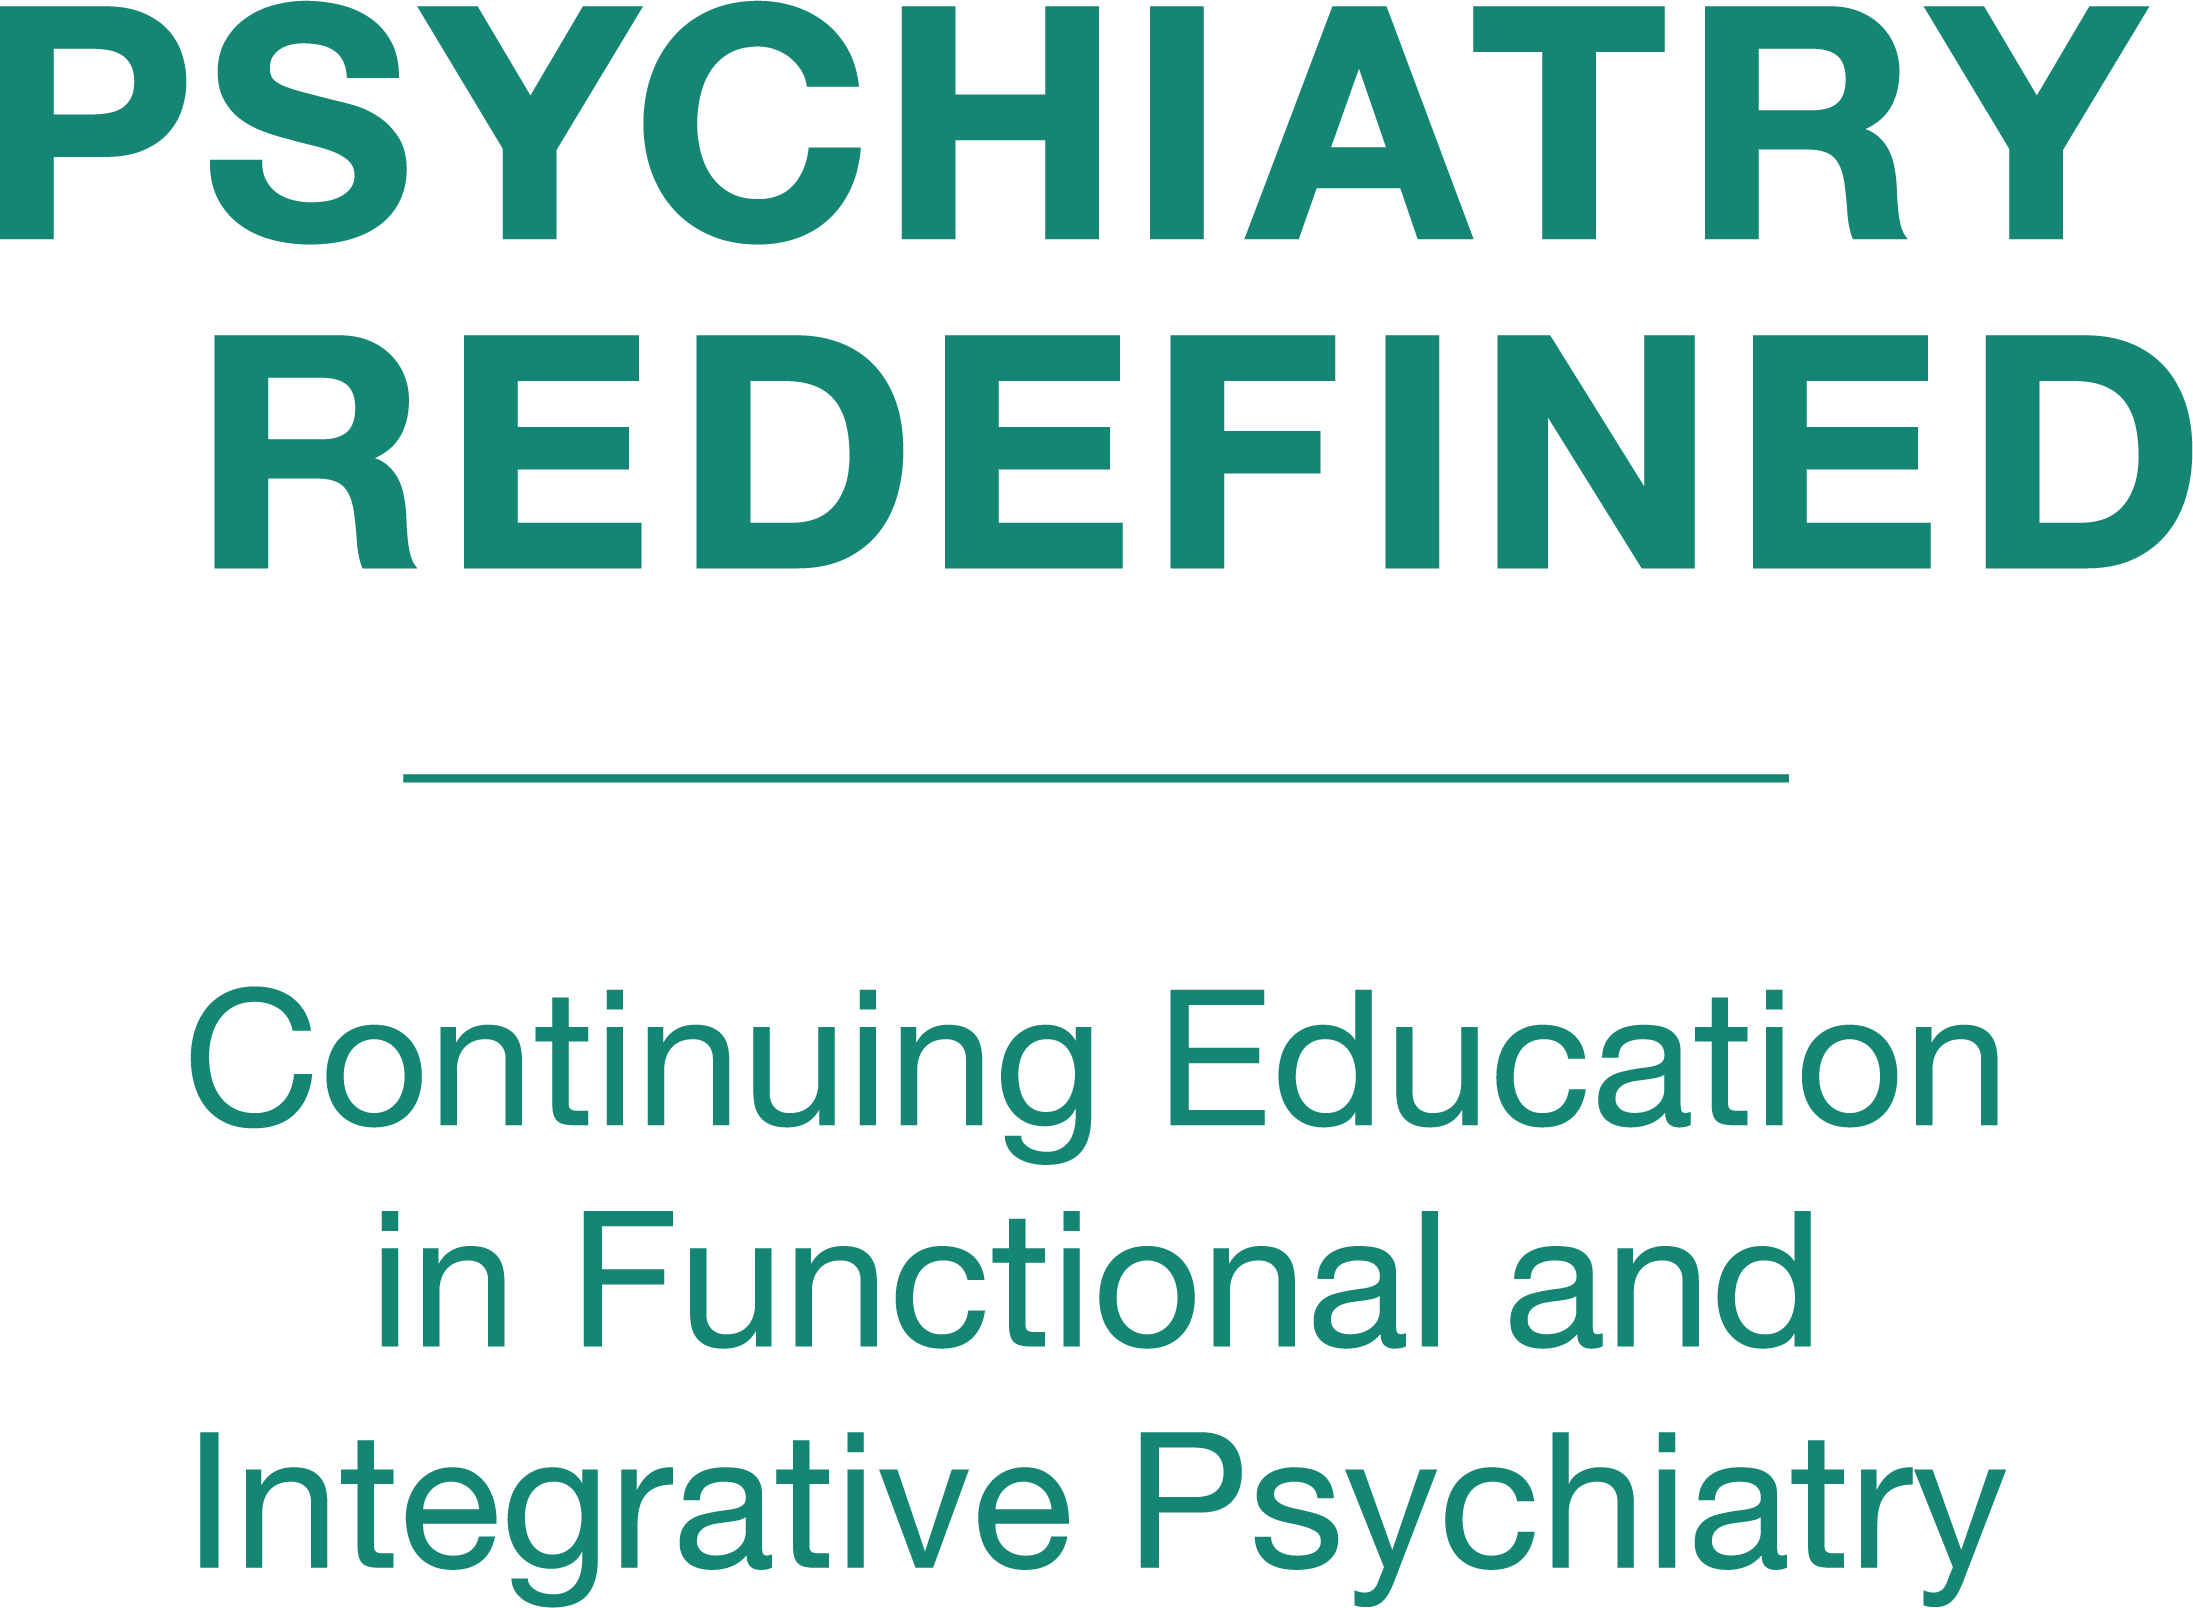 Psychiatry Redefined 